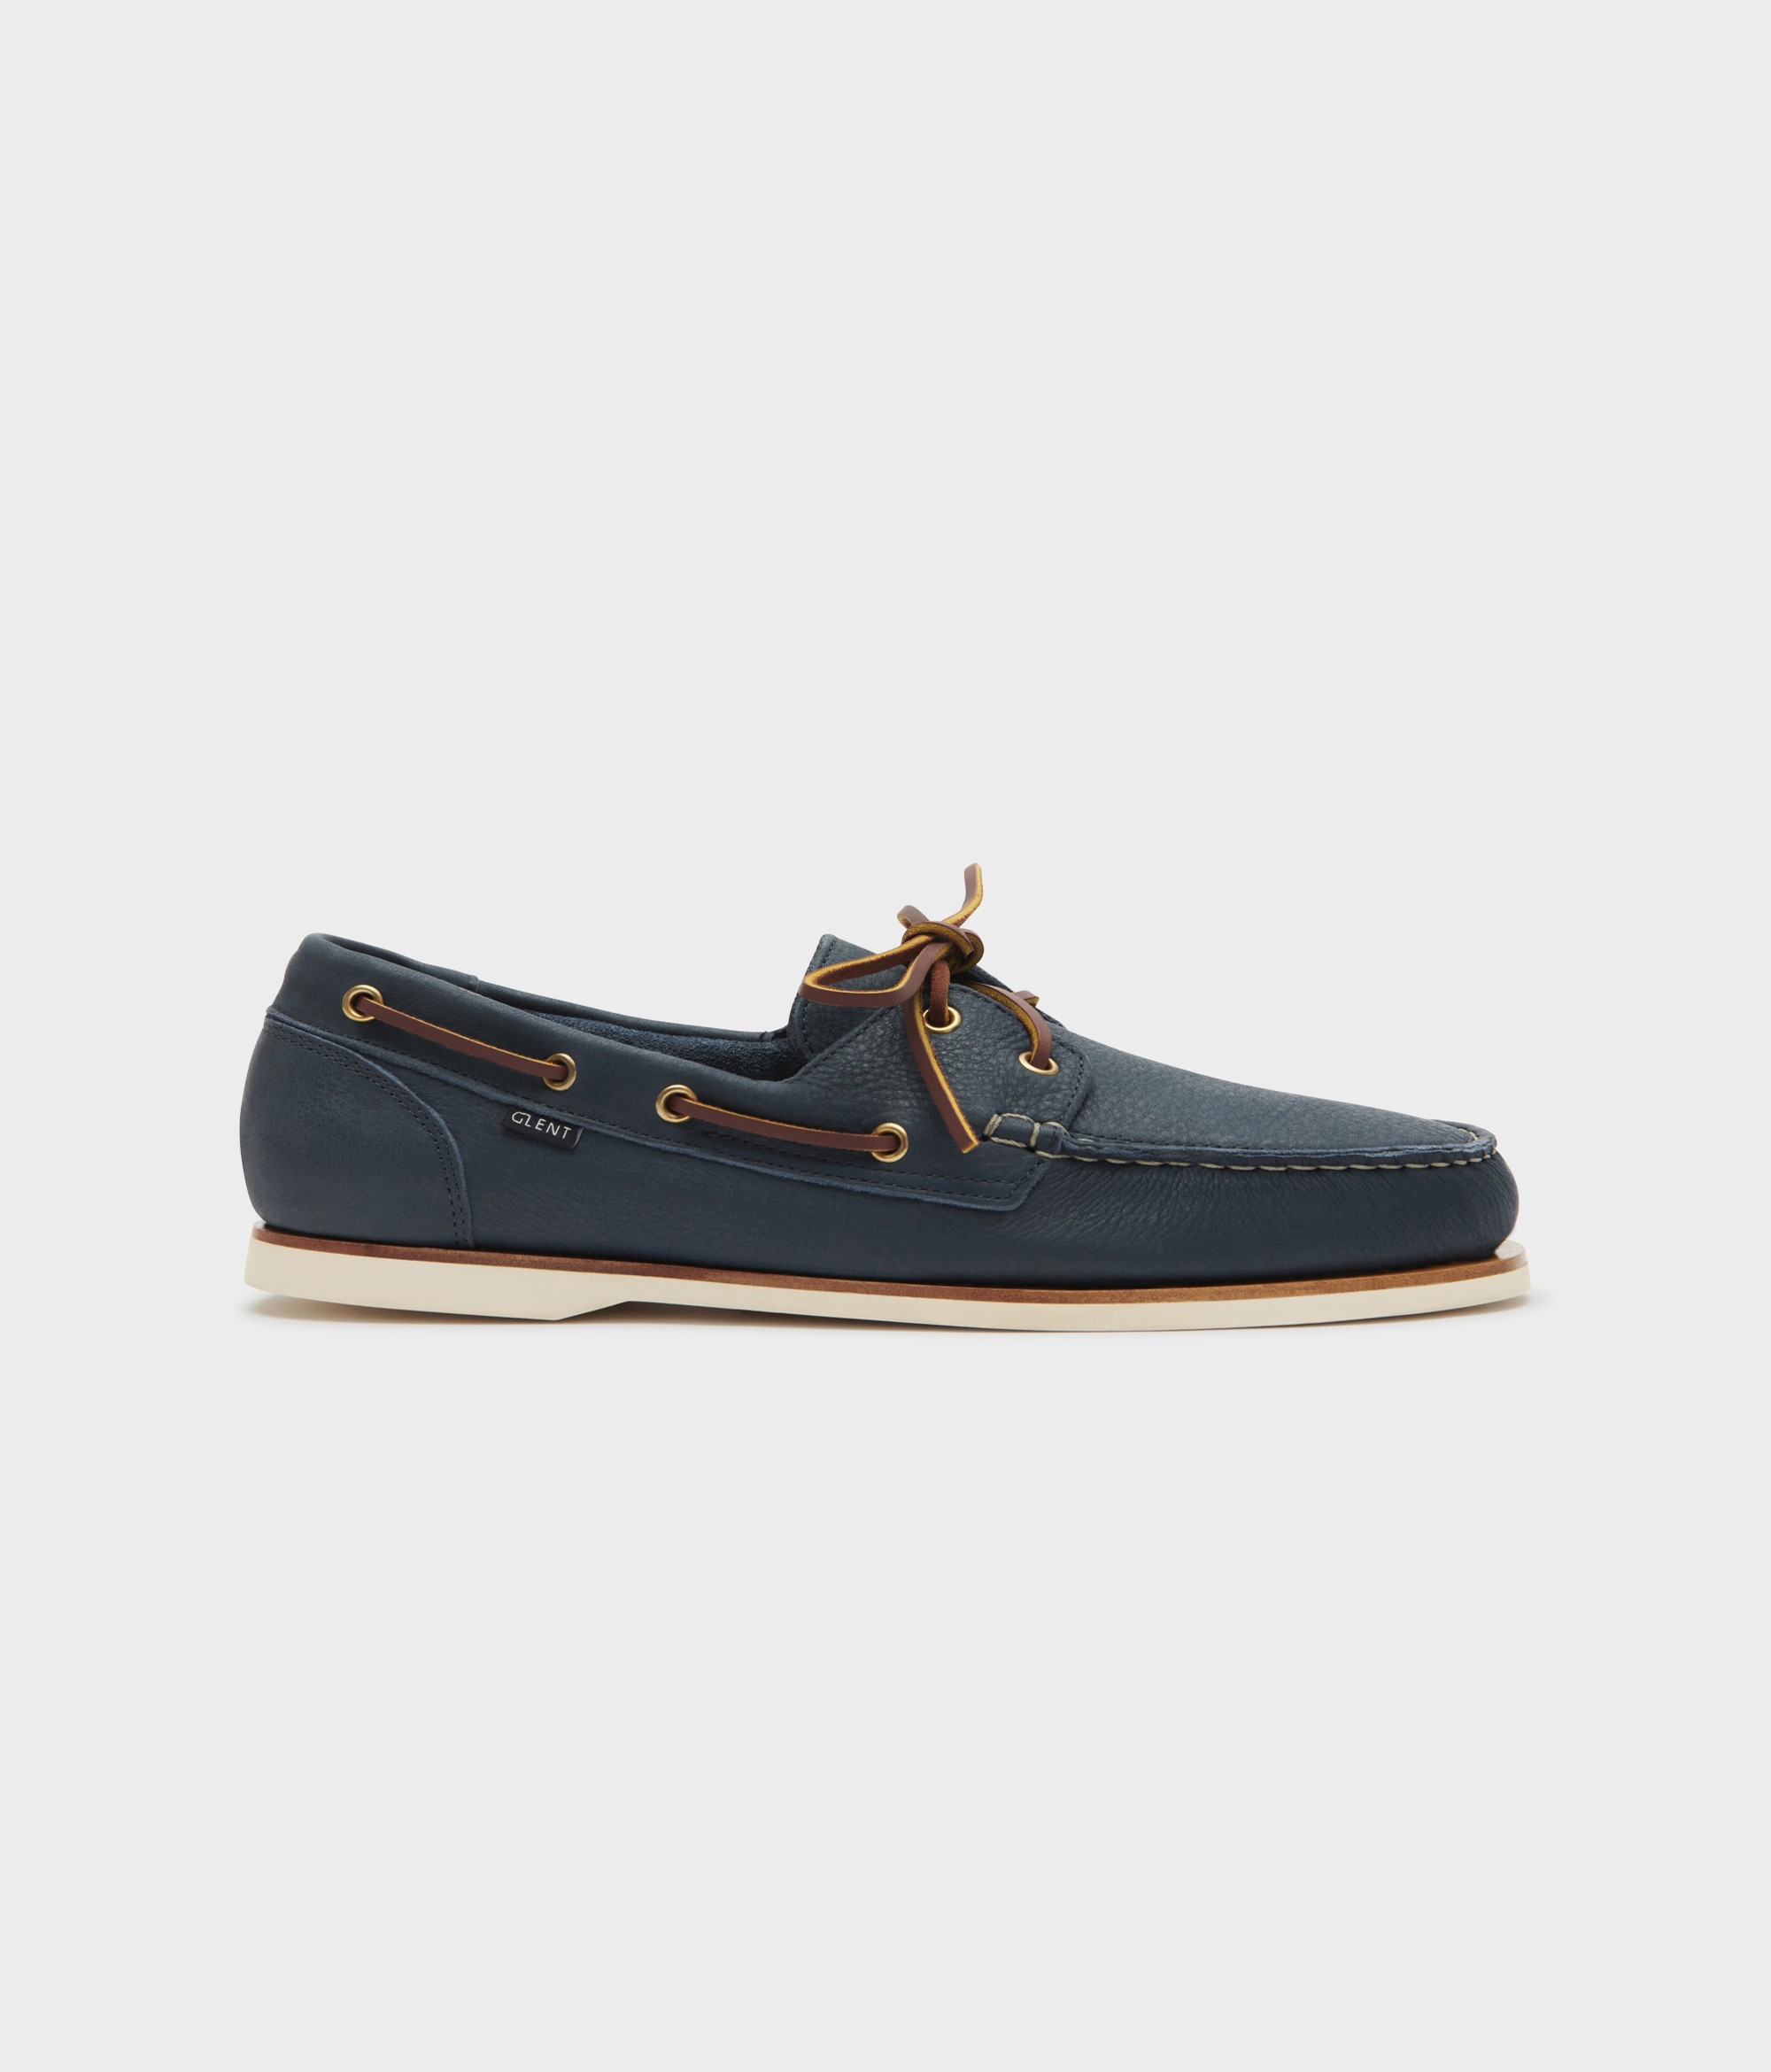 Men's boat shoes with a Vibram rubber sole